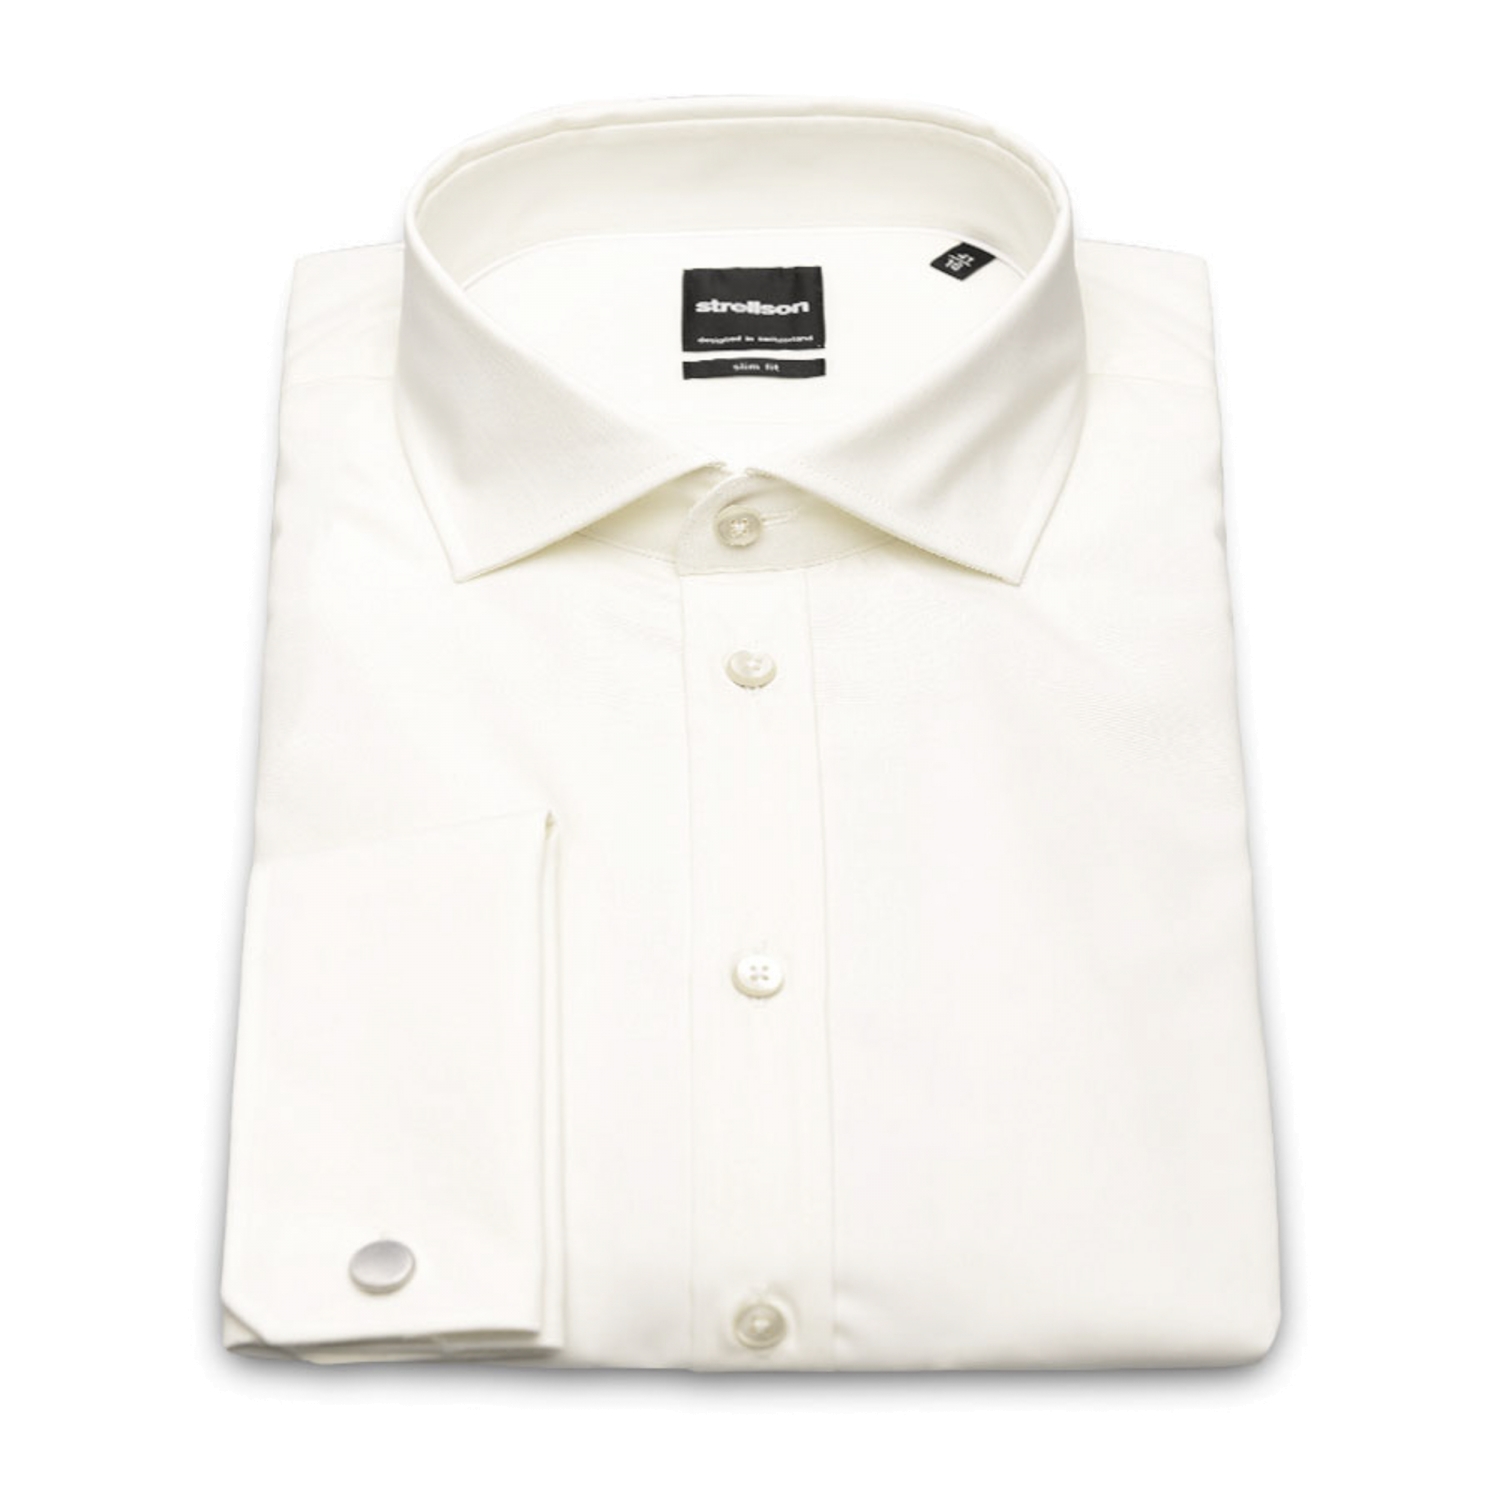 Blaast op Bowling Orthodox Off White overhemd met dubbelmanchet en normale mouwlengte (65cm) van het  merk Strellson 1101662/199 JAMUE UMA Off White